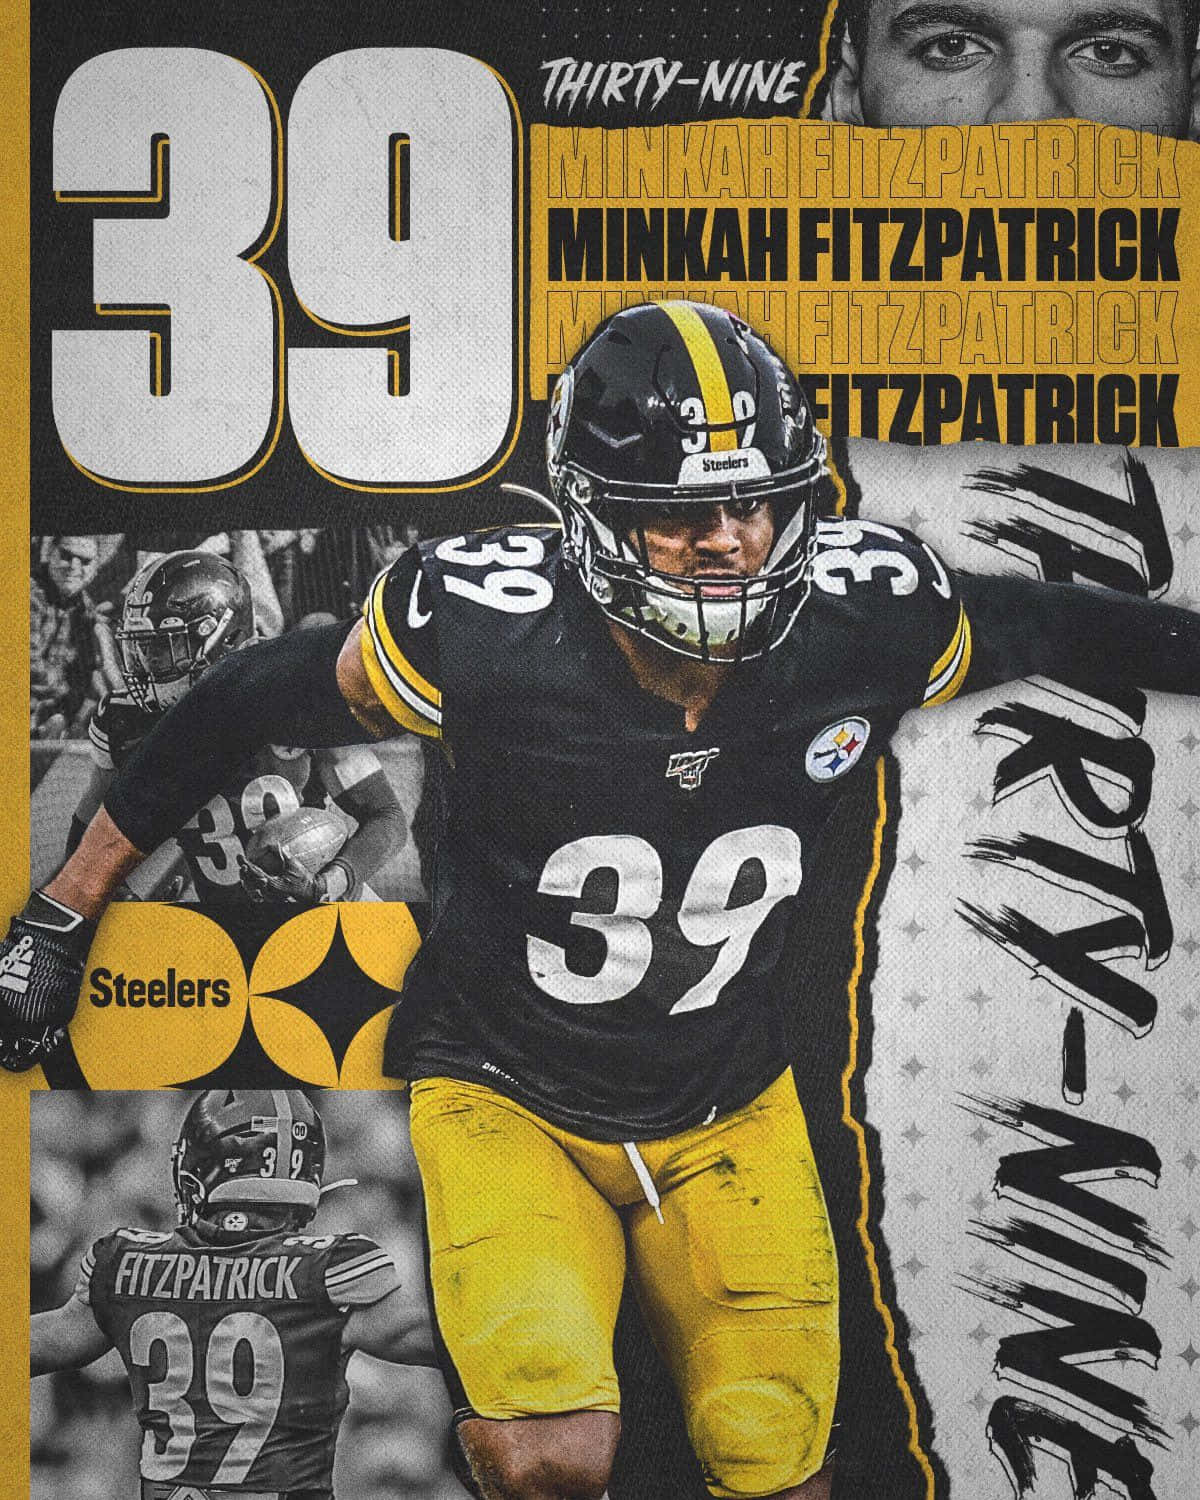 Minkahfitzpatrick Grafisk Konst Pittsburgh Steelers. Wallpaper